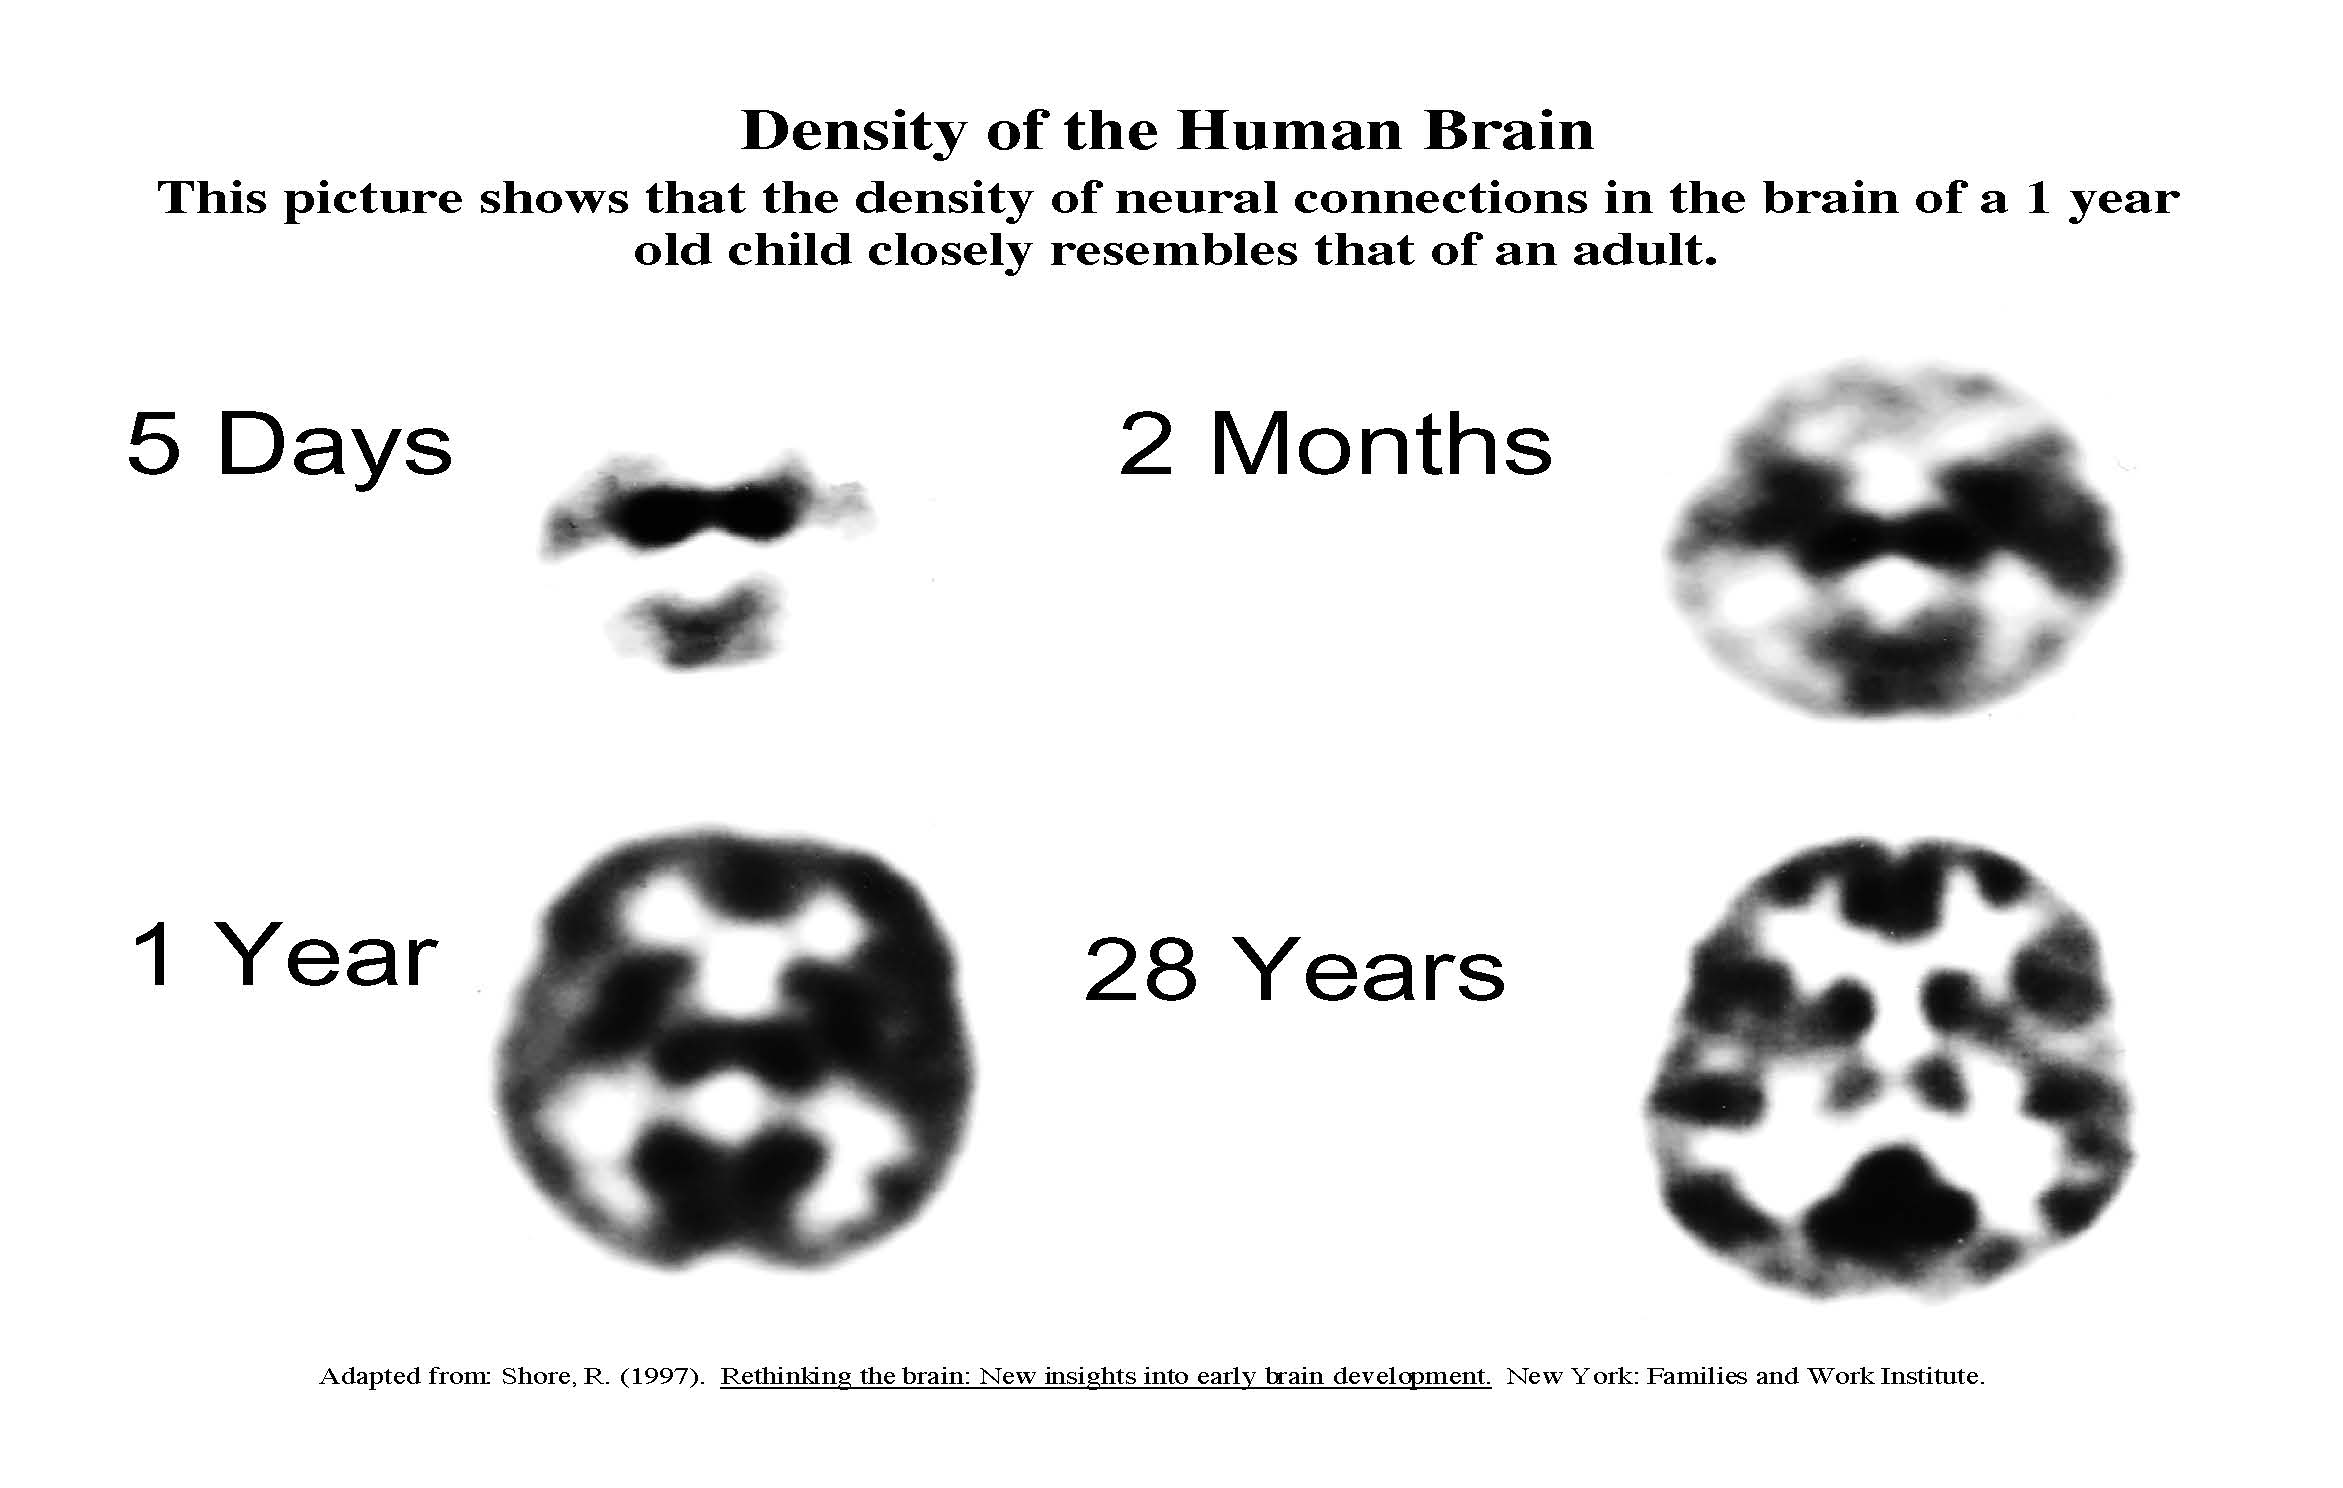 "Density of the human brain"